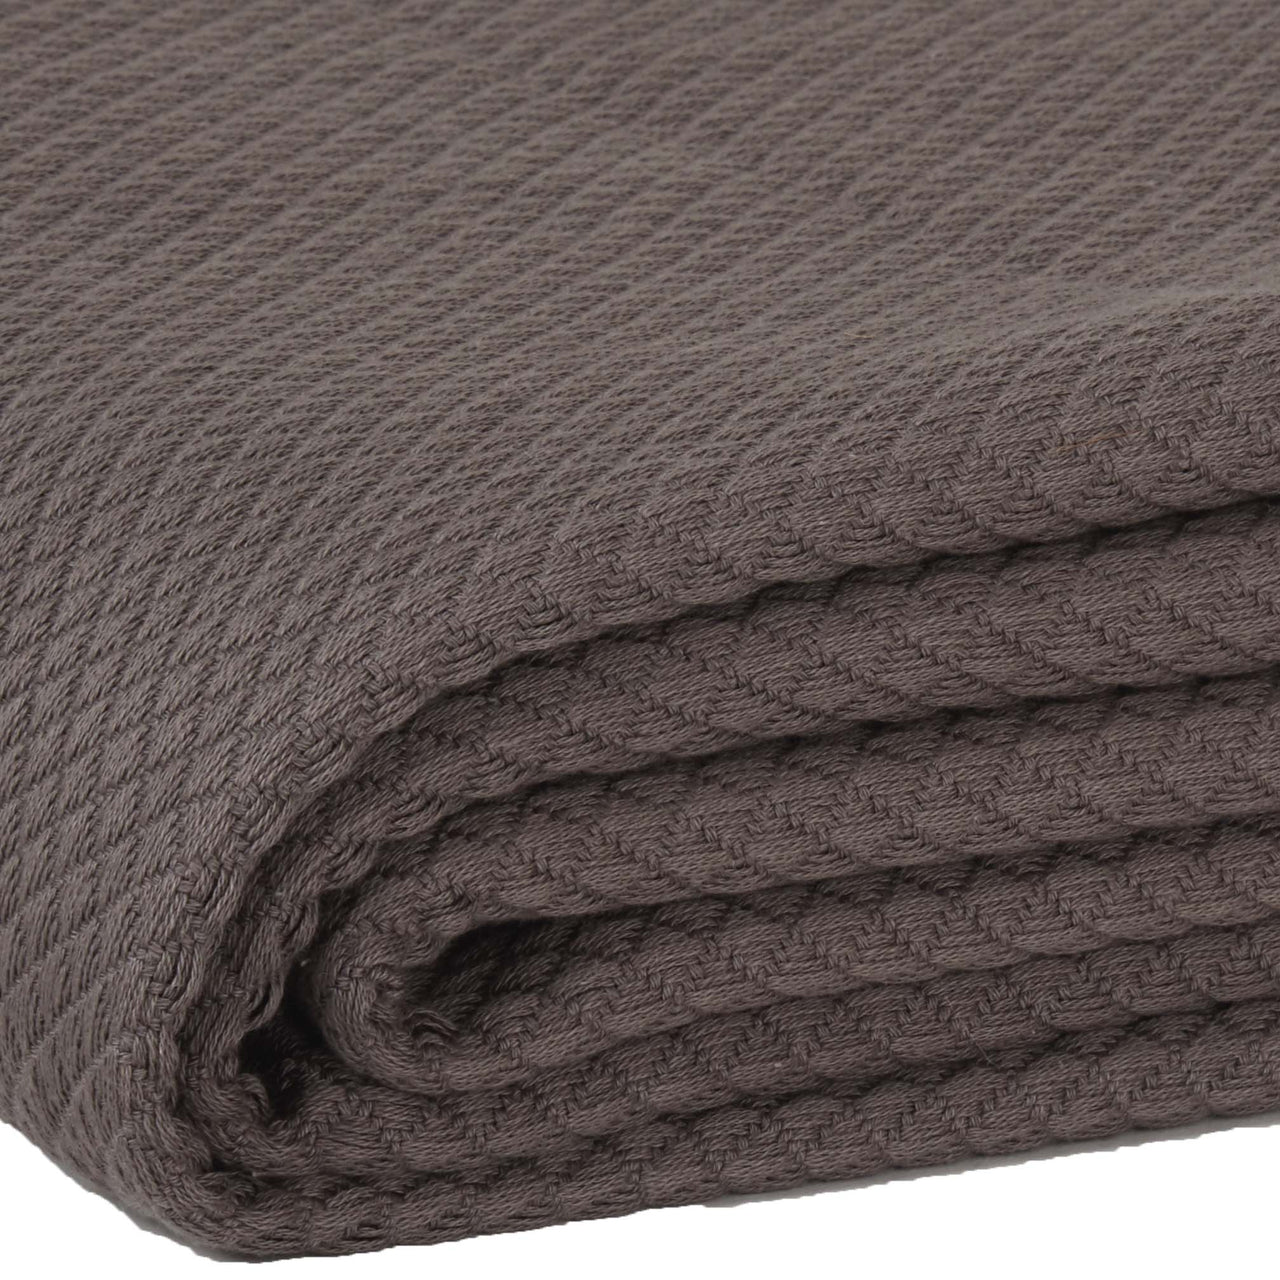 Serenity Grey Cotton Woven Blanket VHC Brands